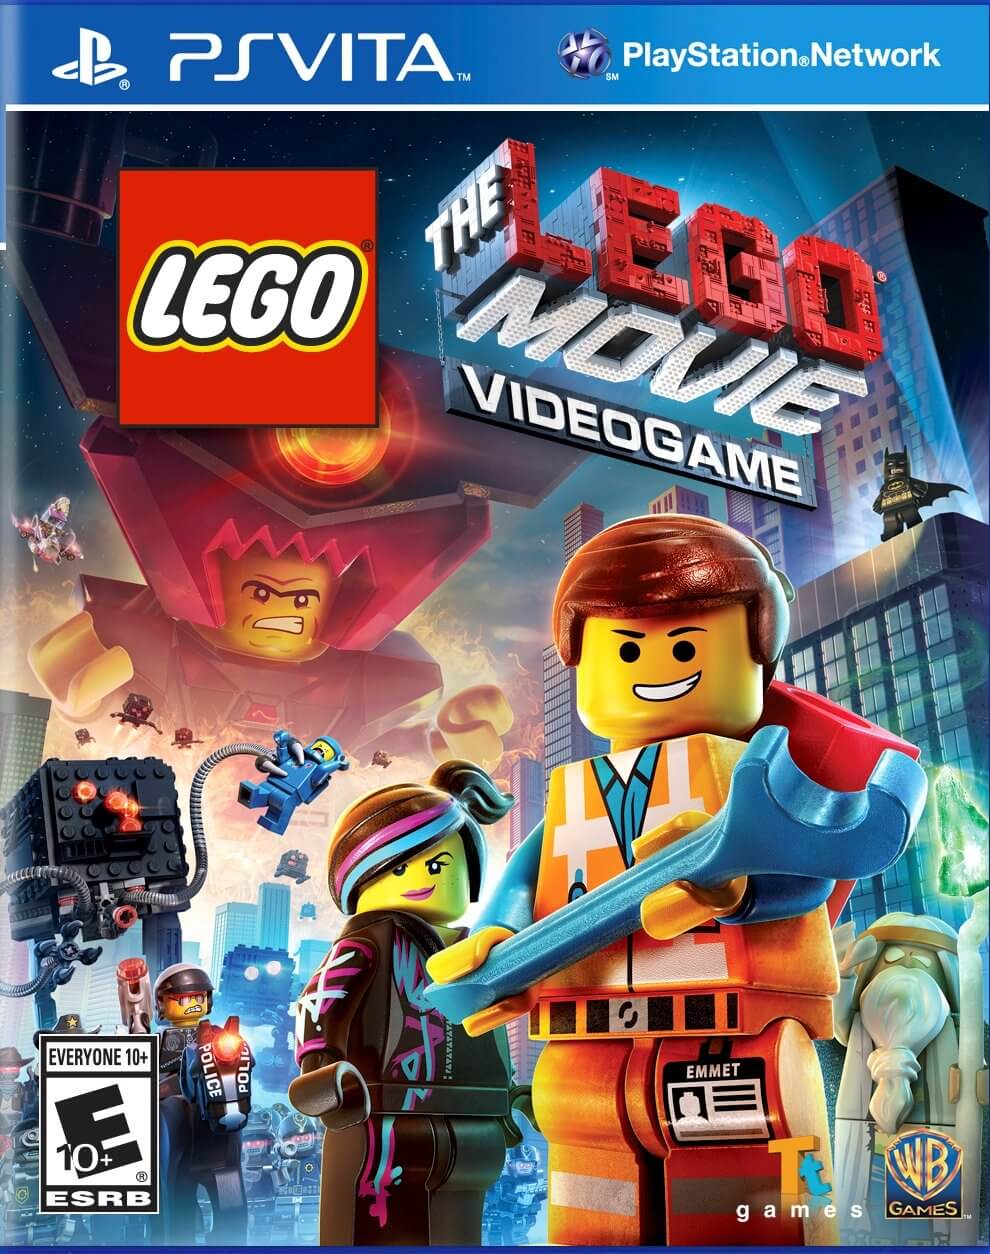 LEGO Movie Videogame